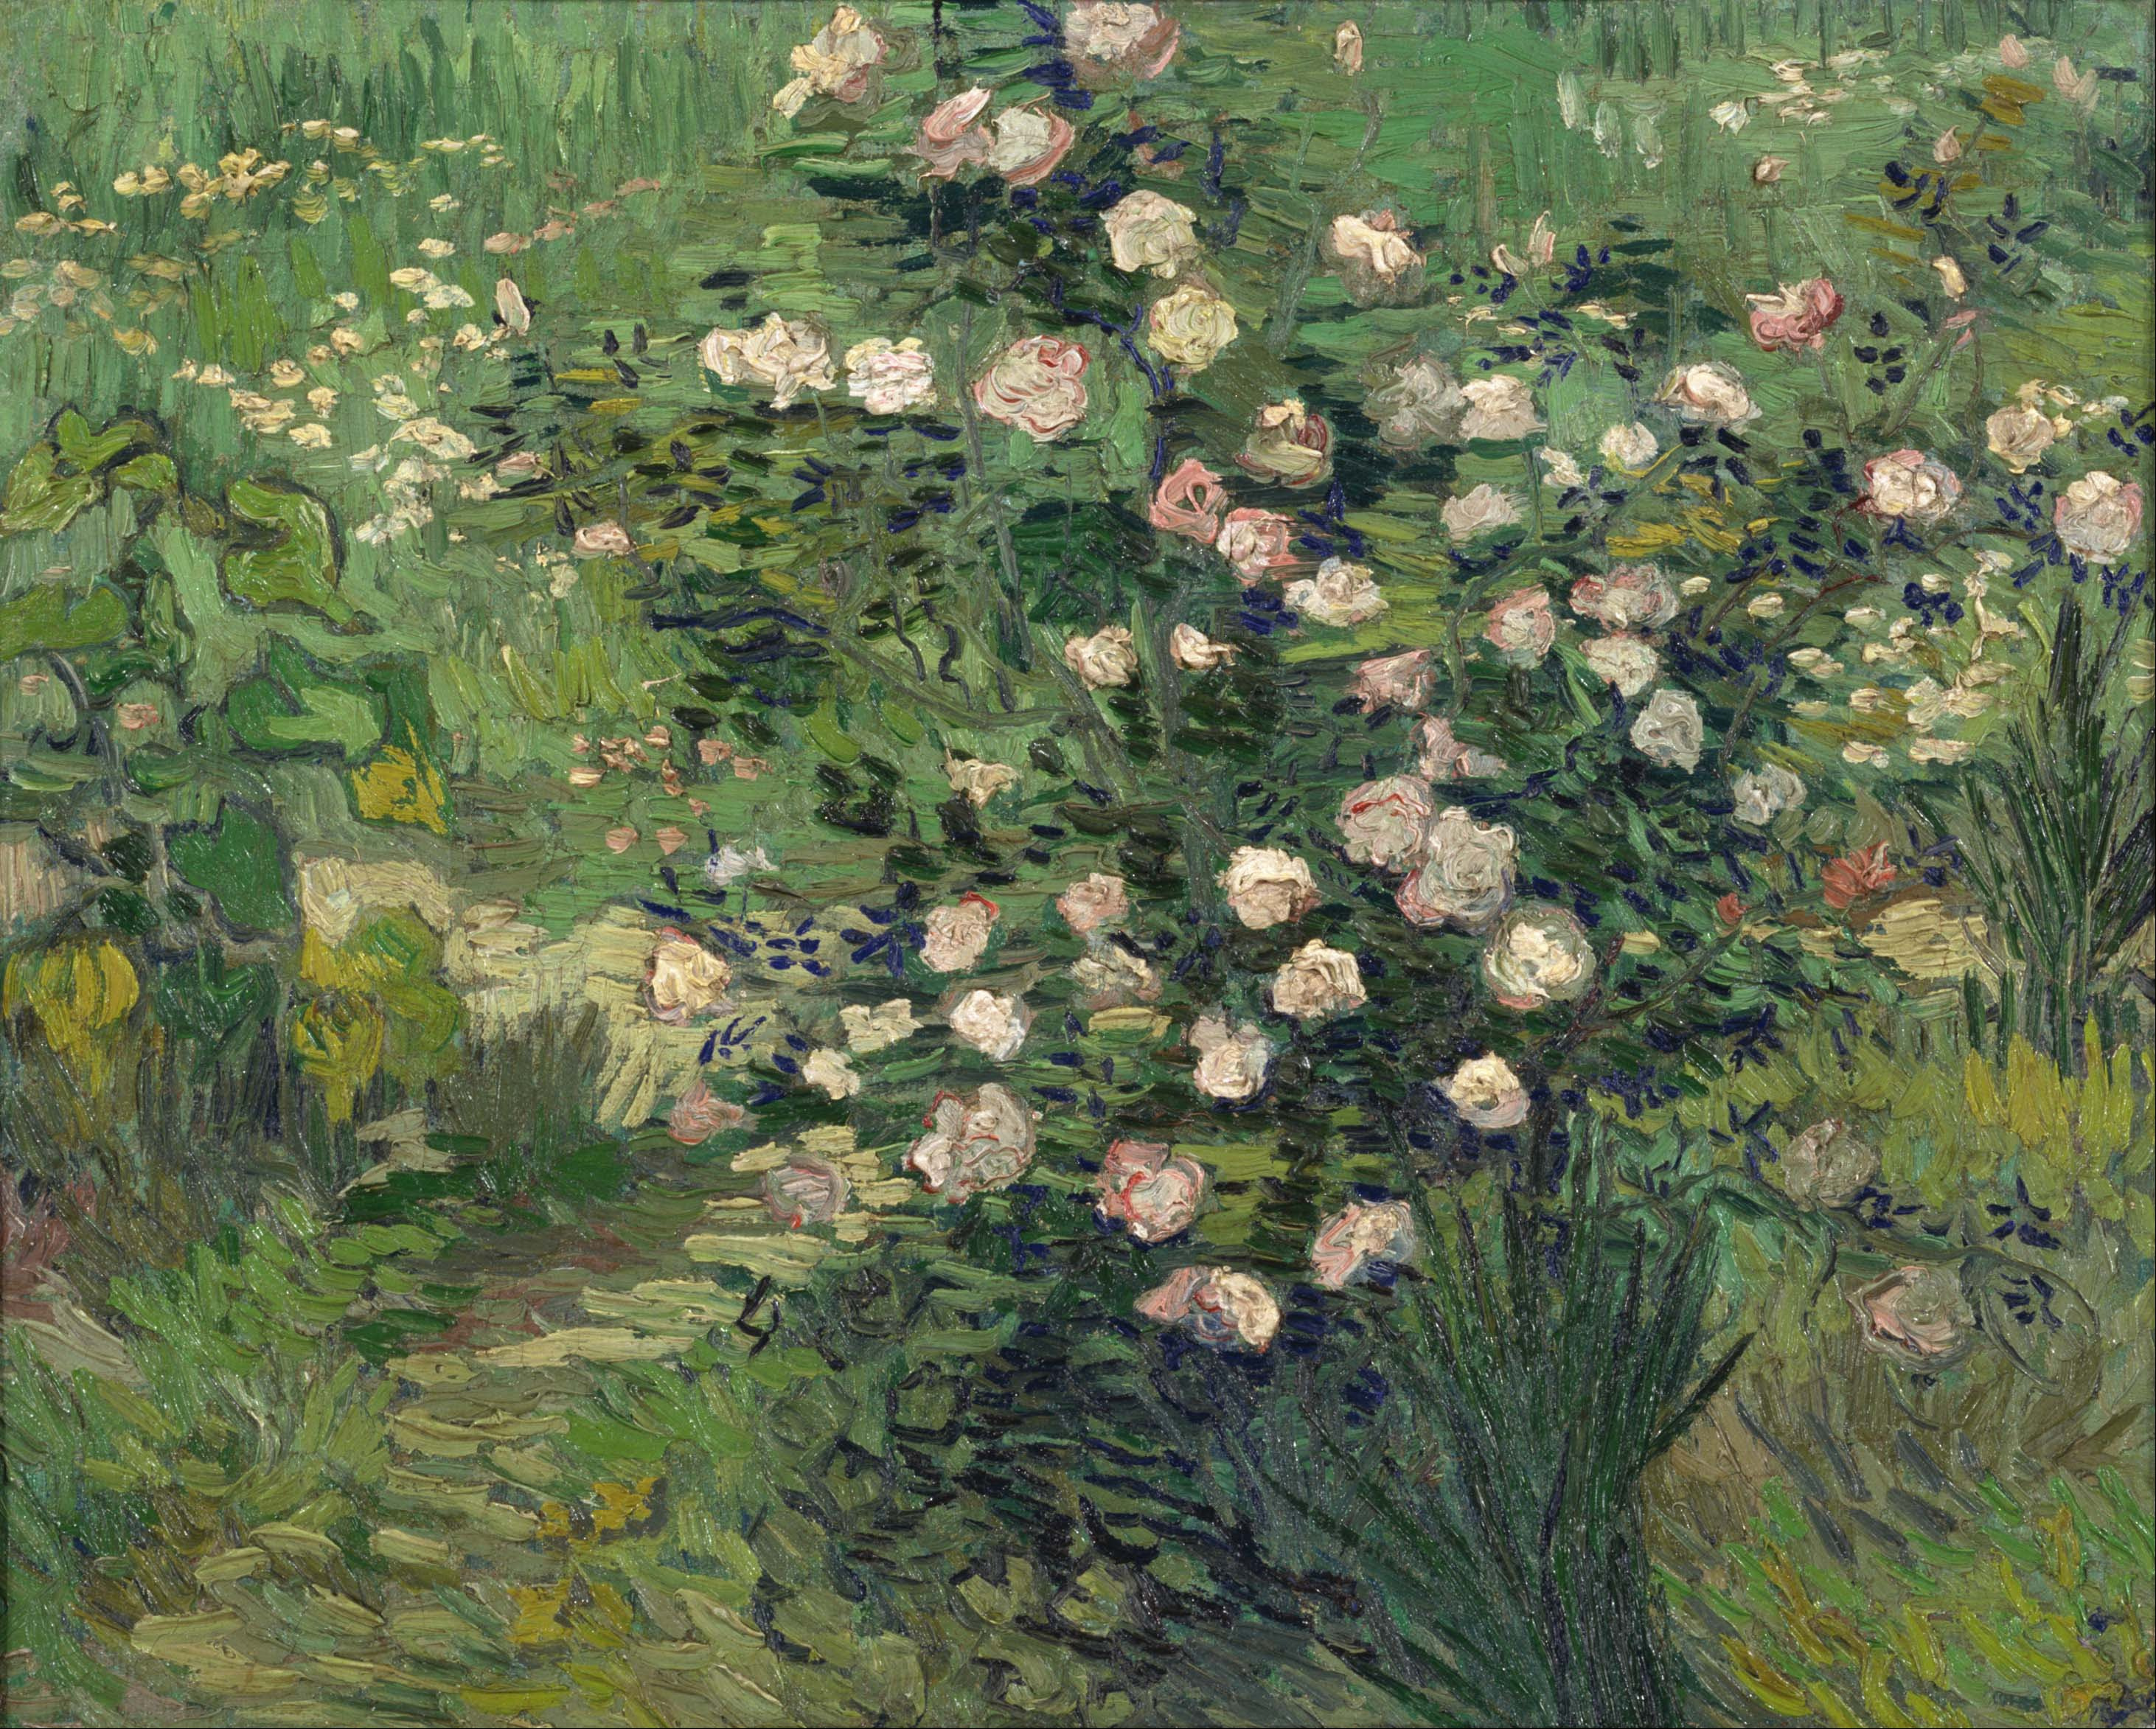 Güller by Vincent van Gogh - 1889 - 41.3 x 33.0 cm 